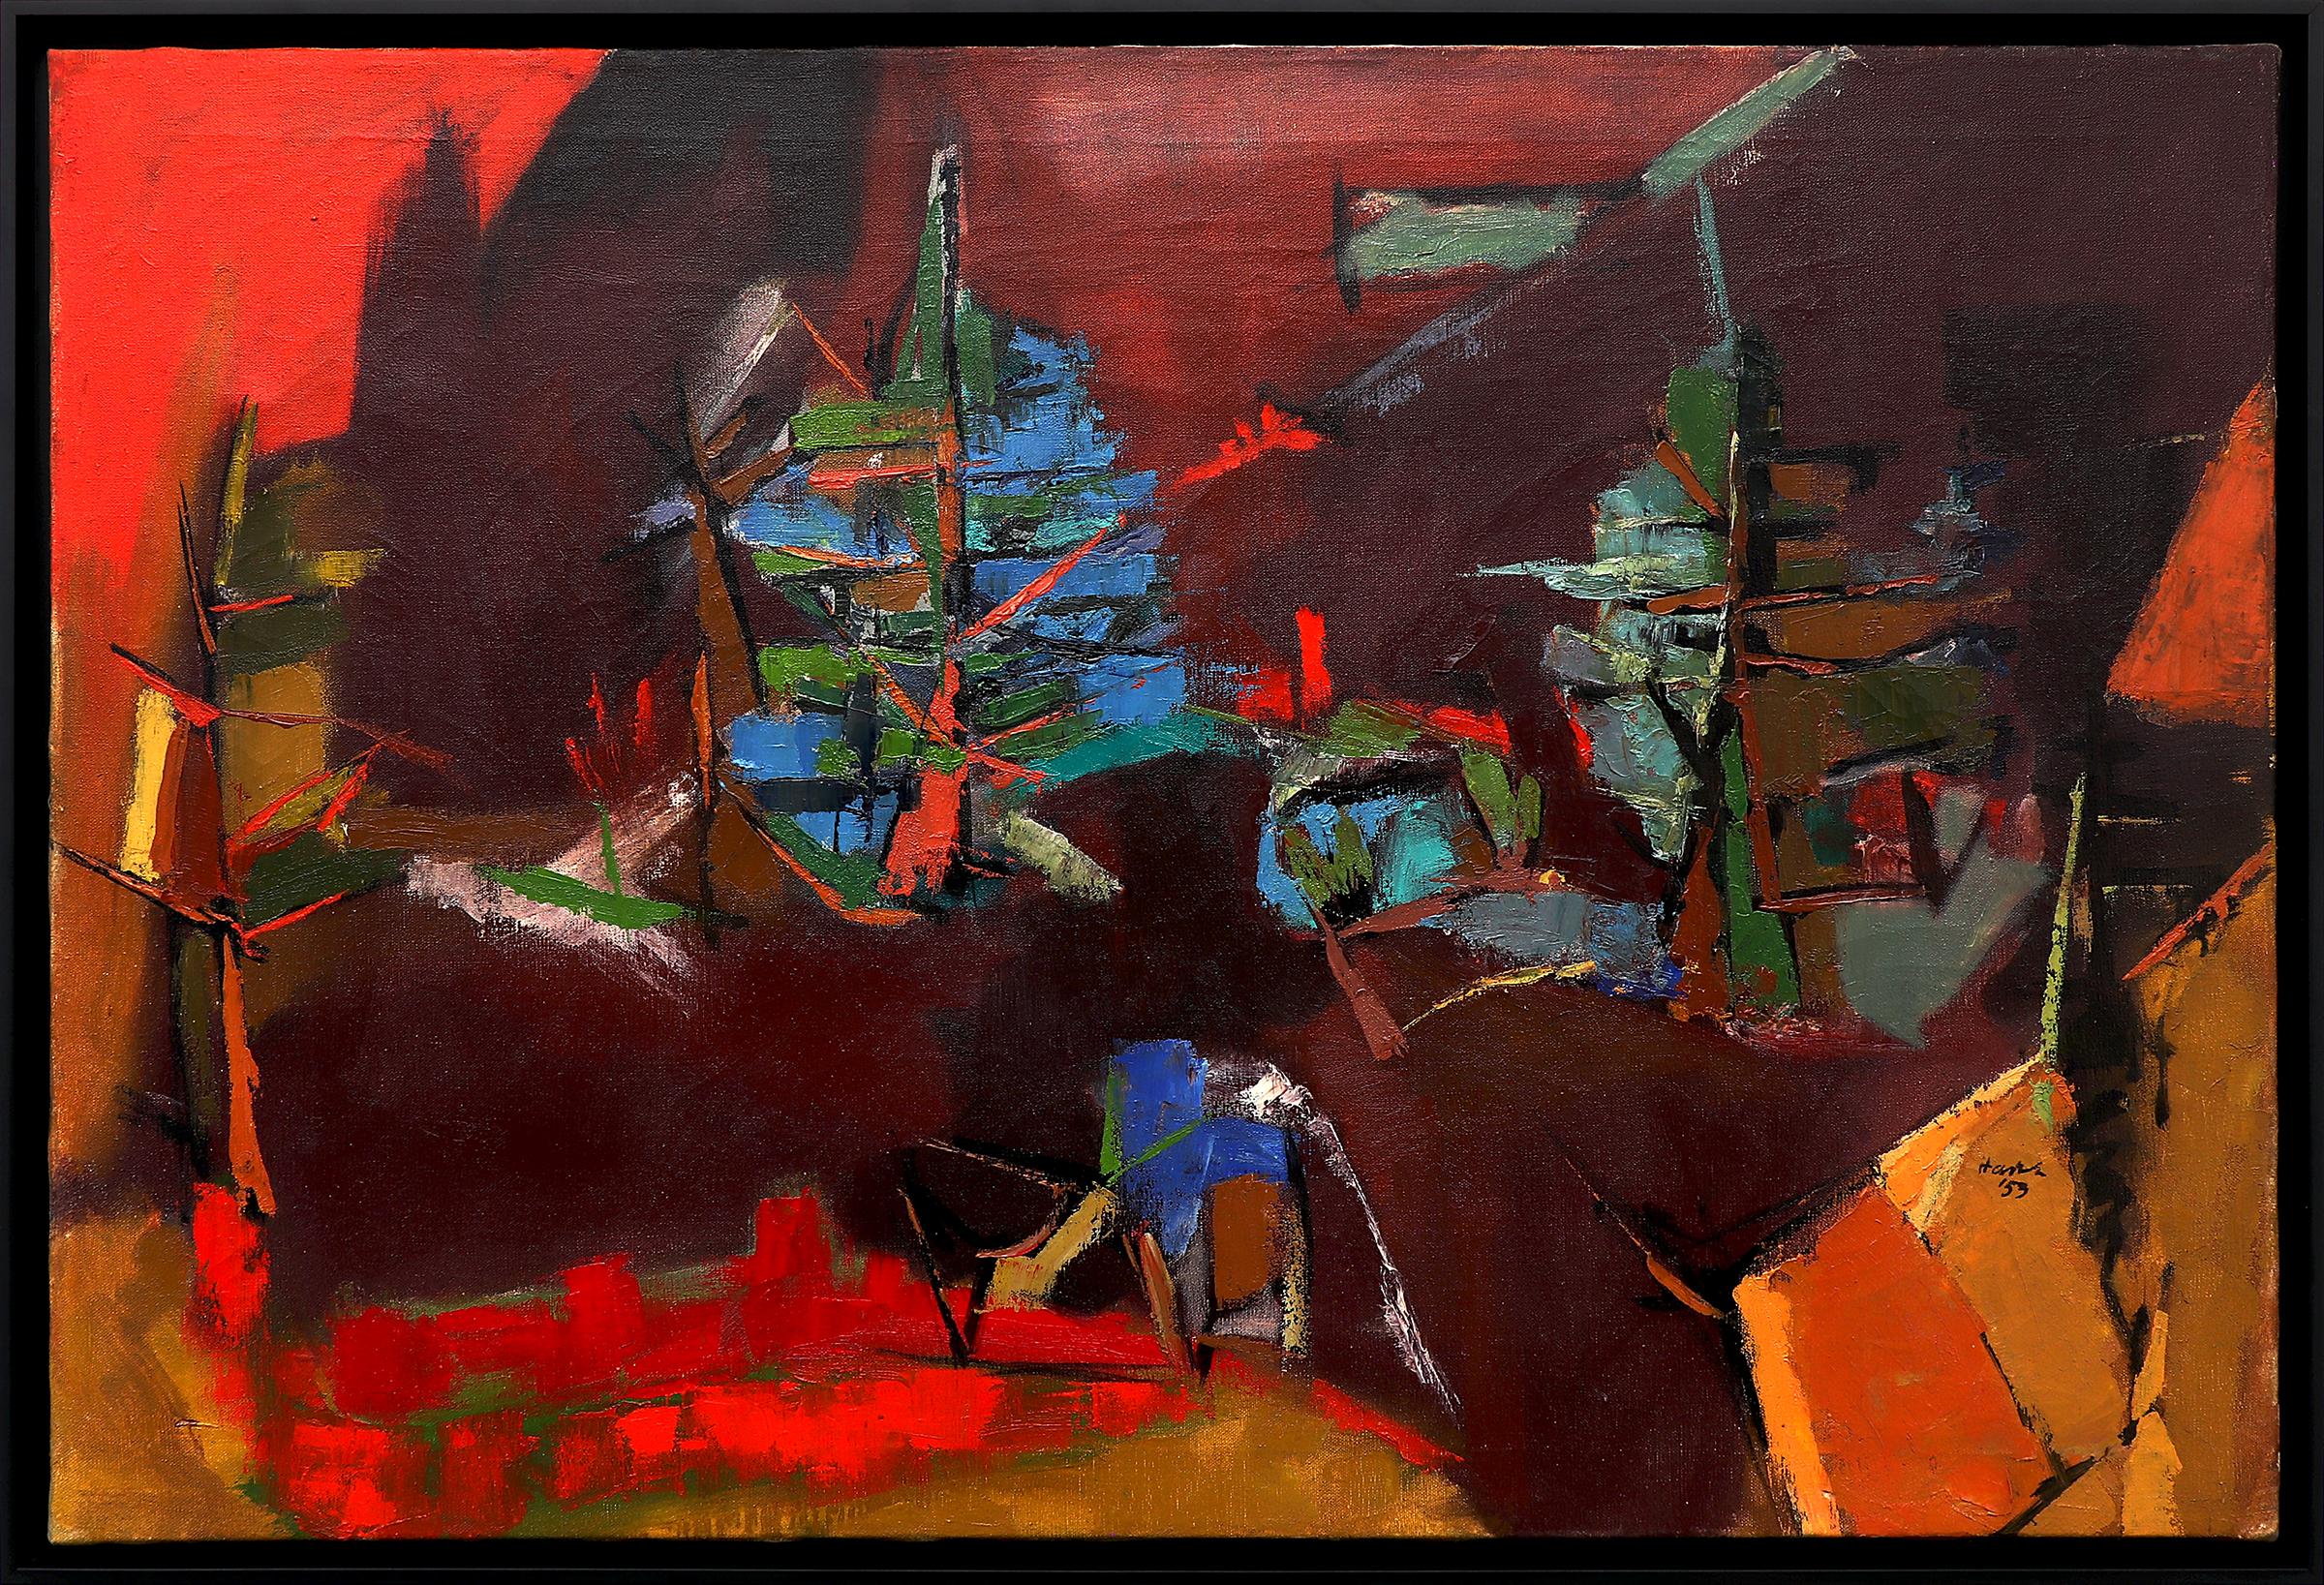 Harvey Litvack Abstract Painting - 1950s Framed Abstract Oil Painting, Abstracted Painting in Red, Blue, Green